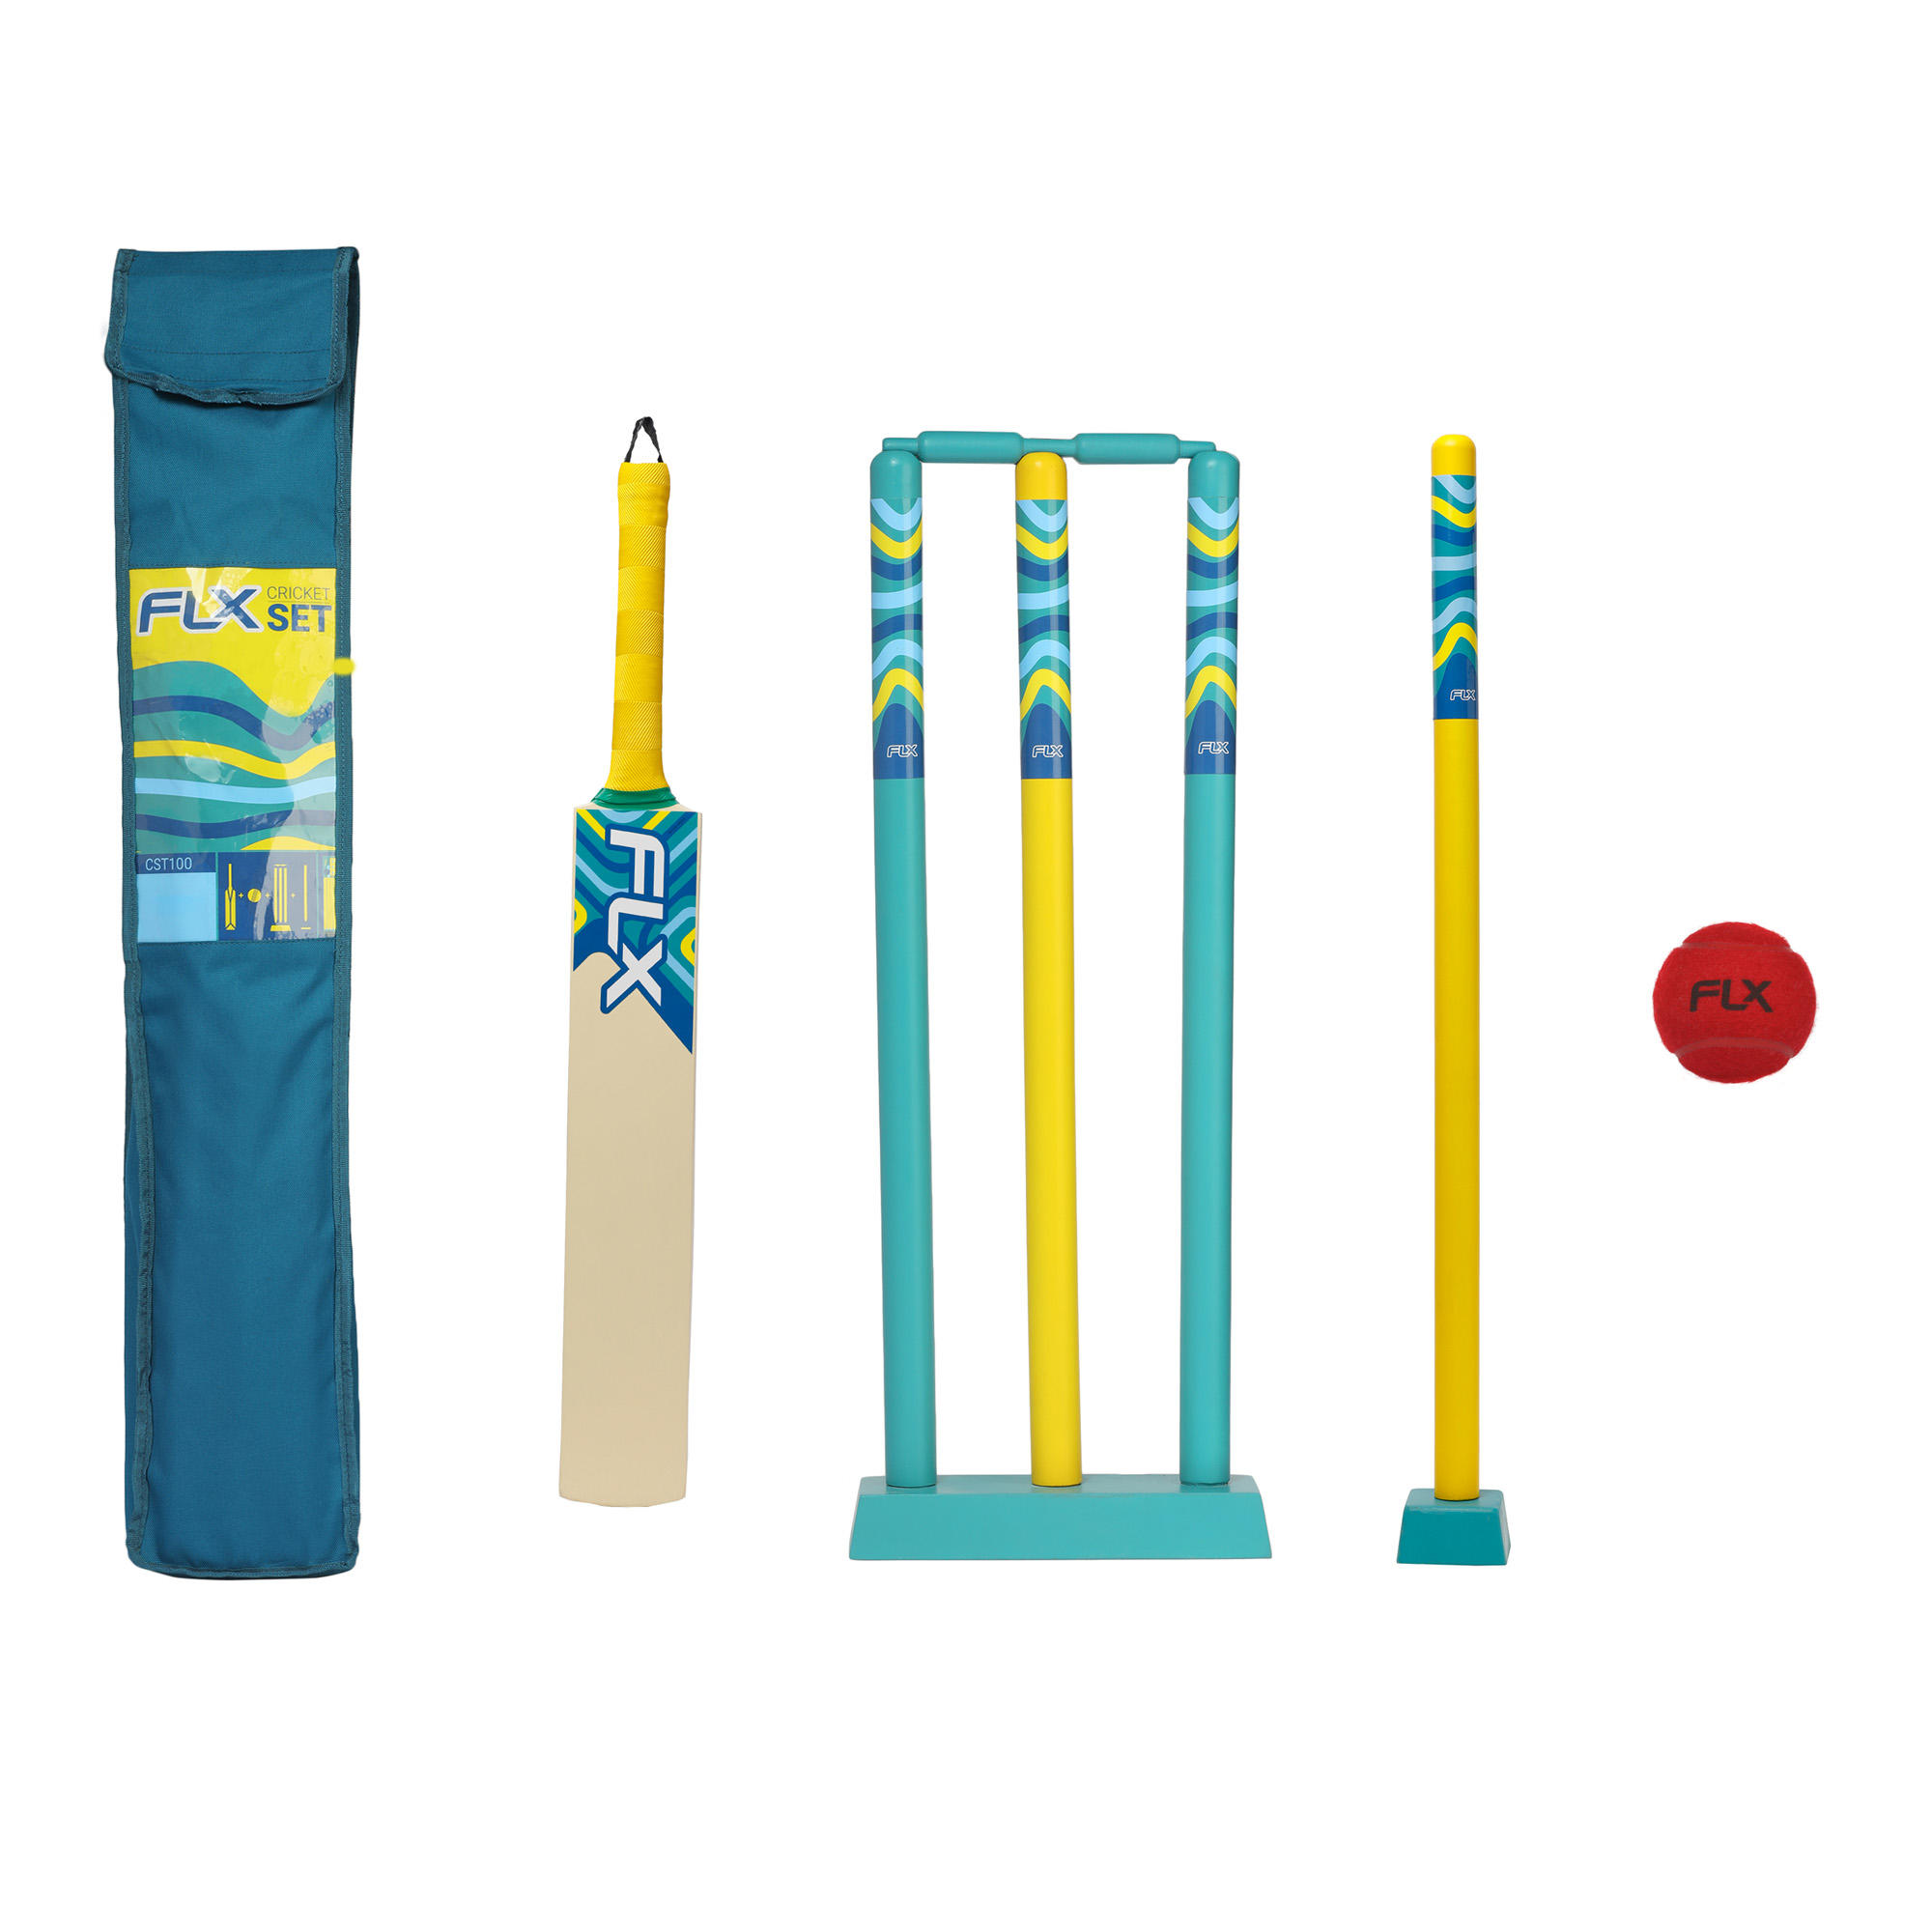 cricket kit in decathlon